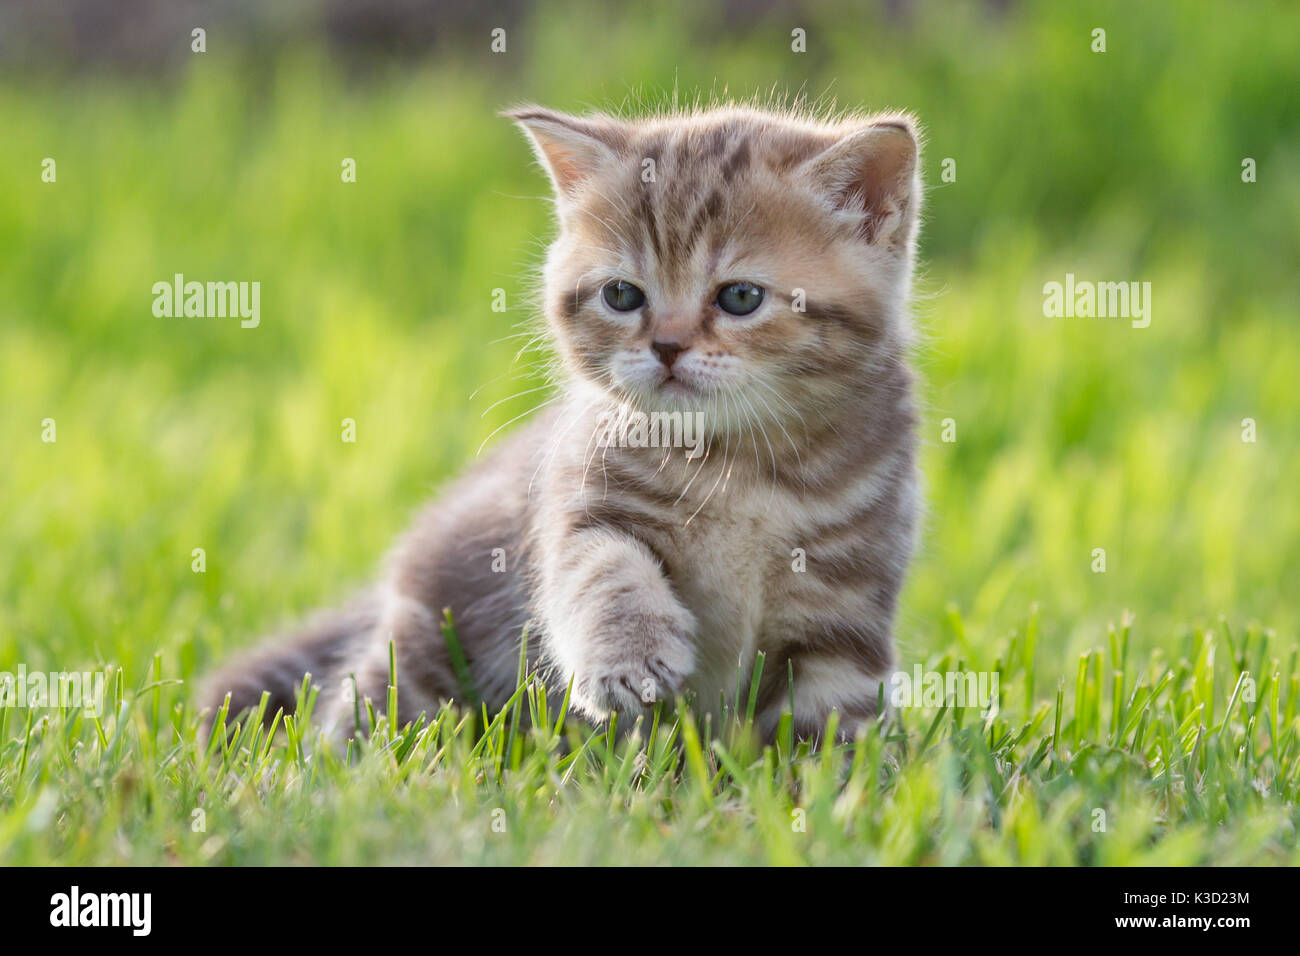 baby cat or kitten in green grass Stock Photo